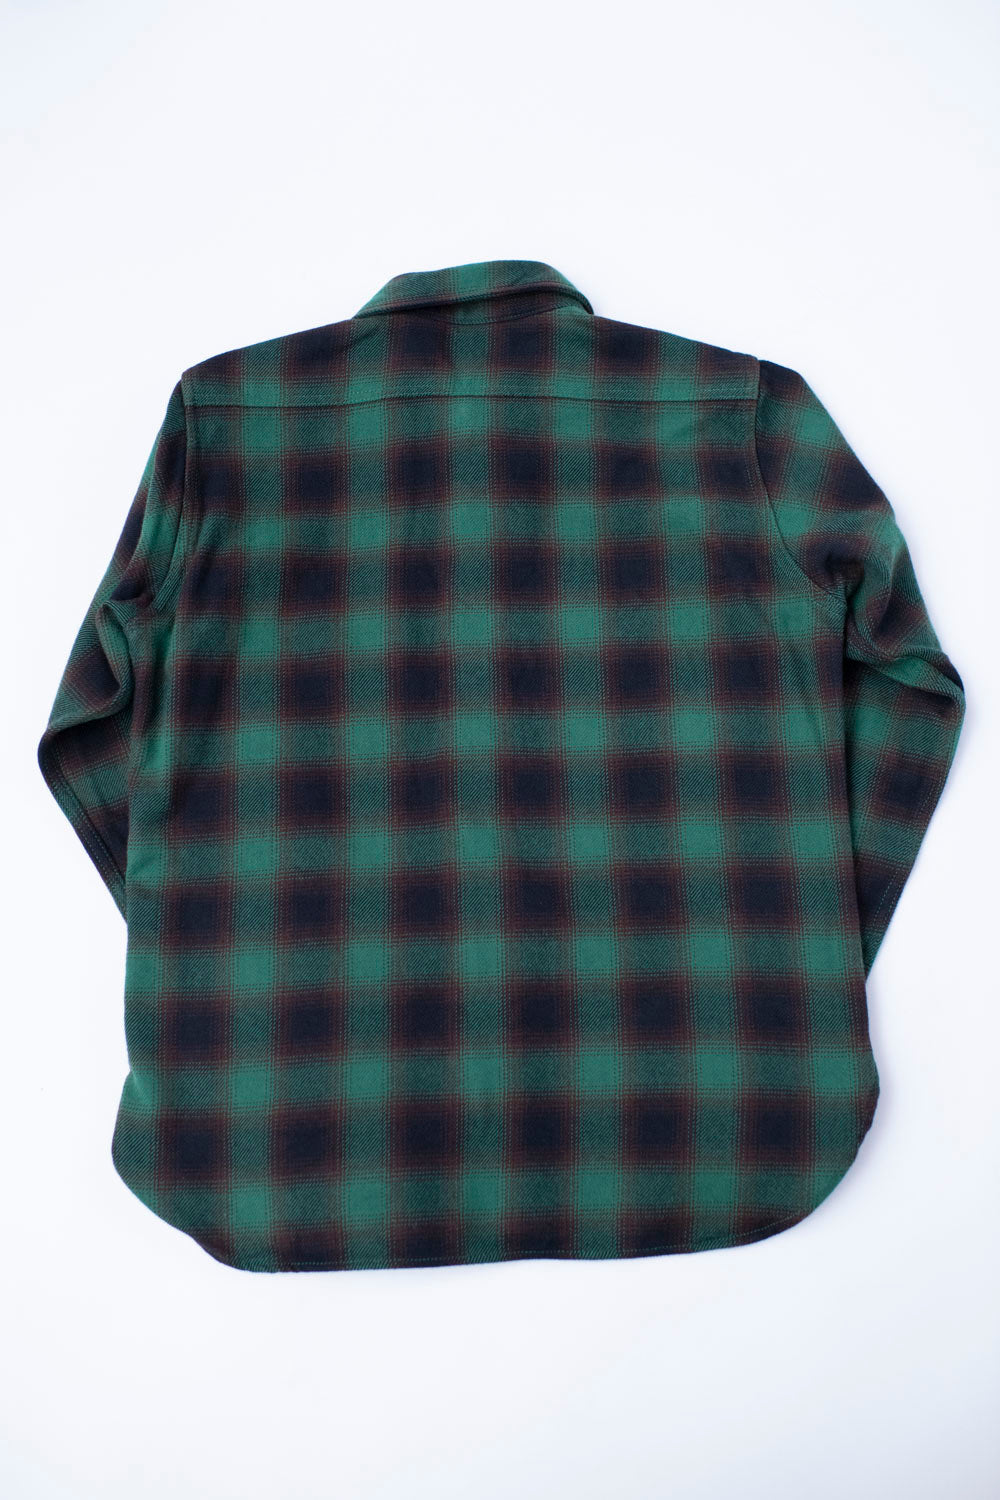 IHSH-379-GRN - Ultra Heavy Flannel Ombré Check Work Shirt - Green